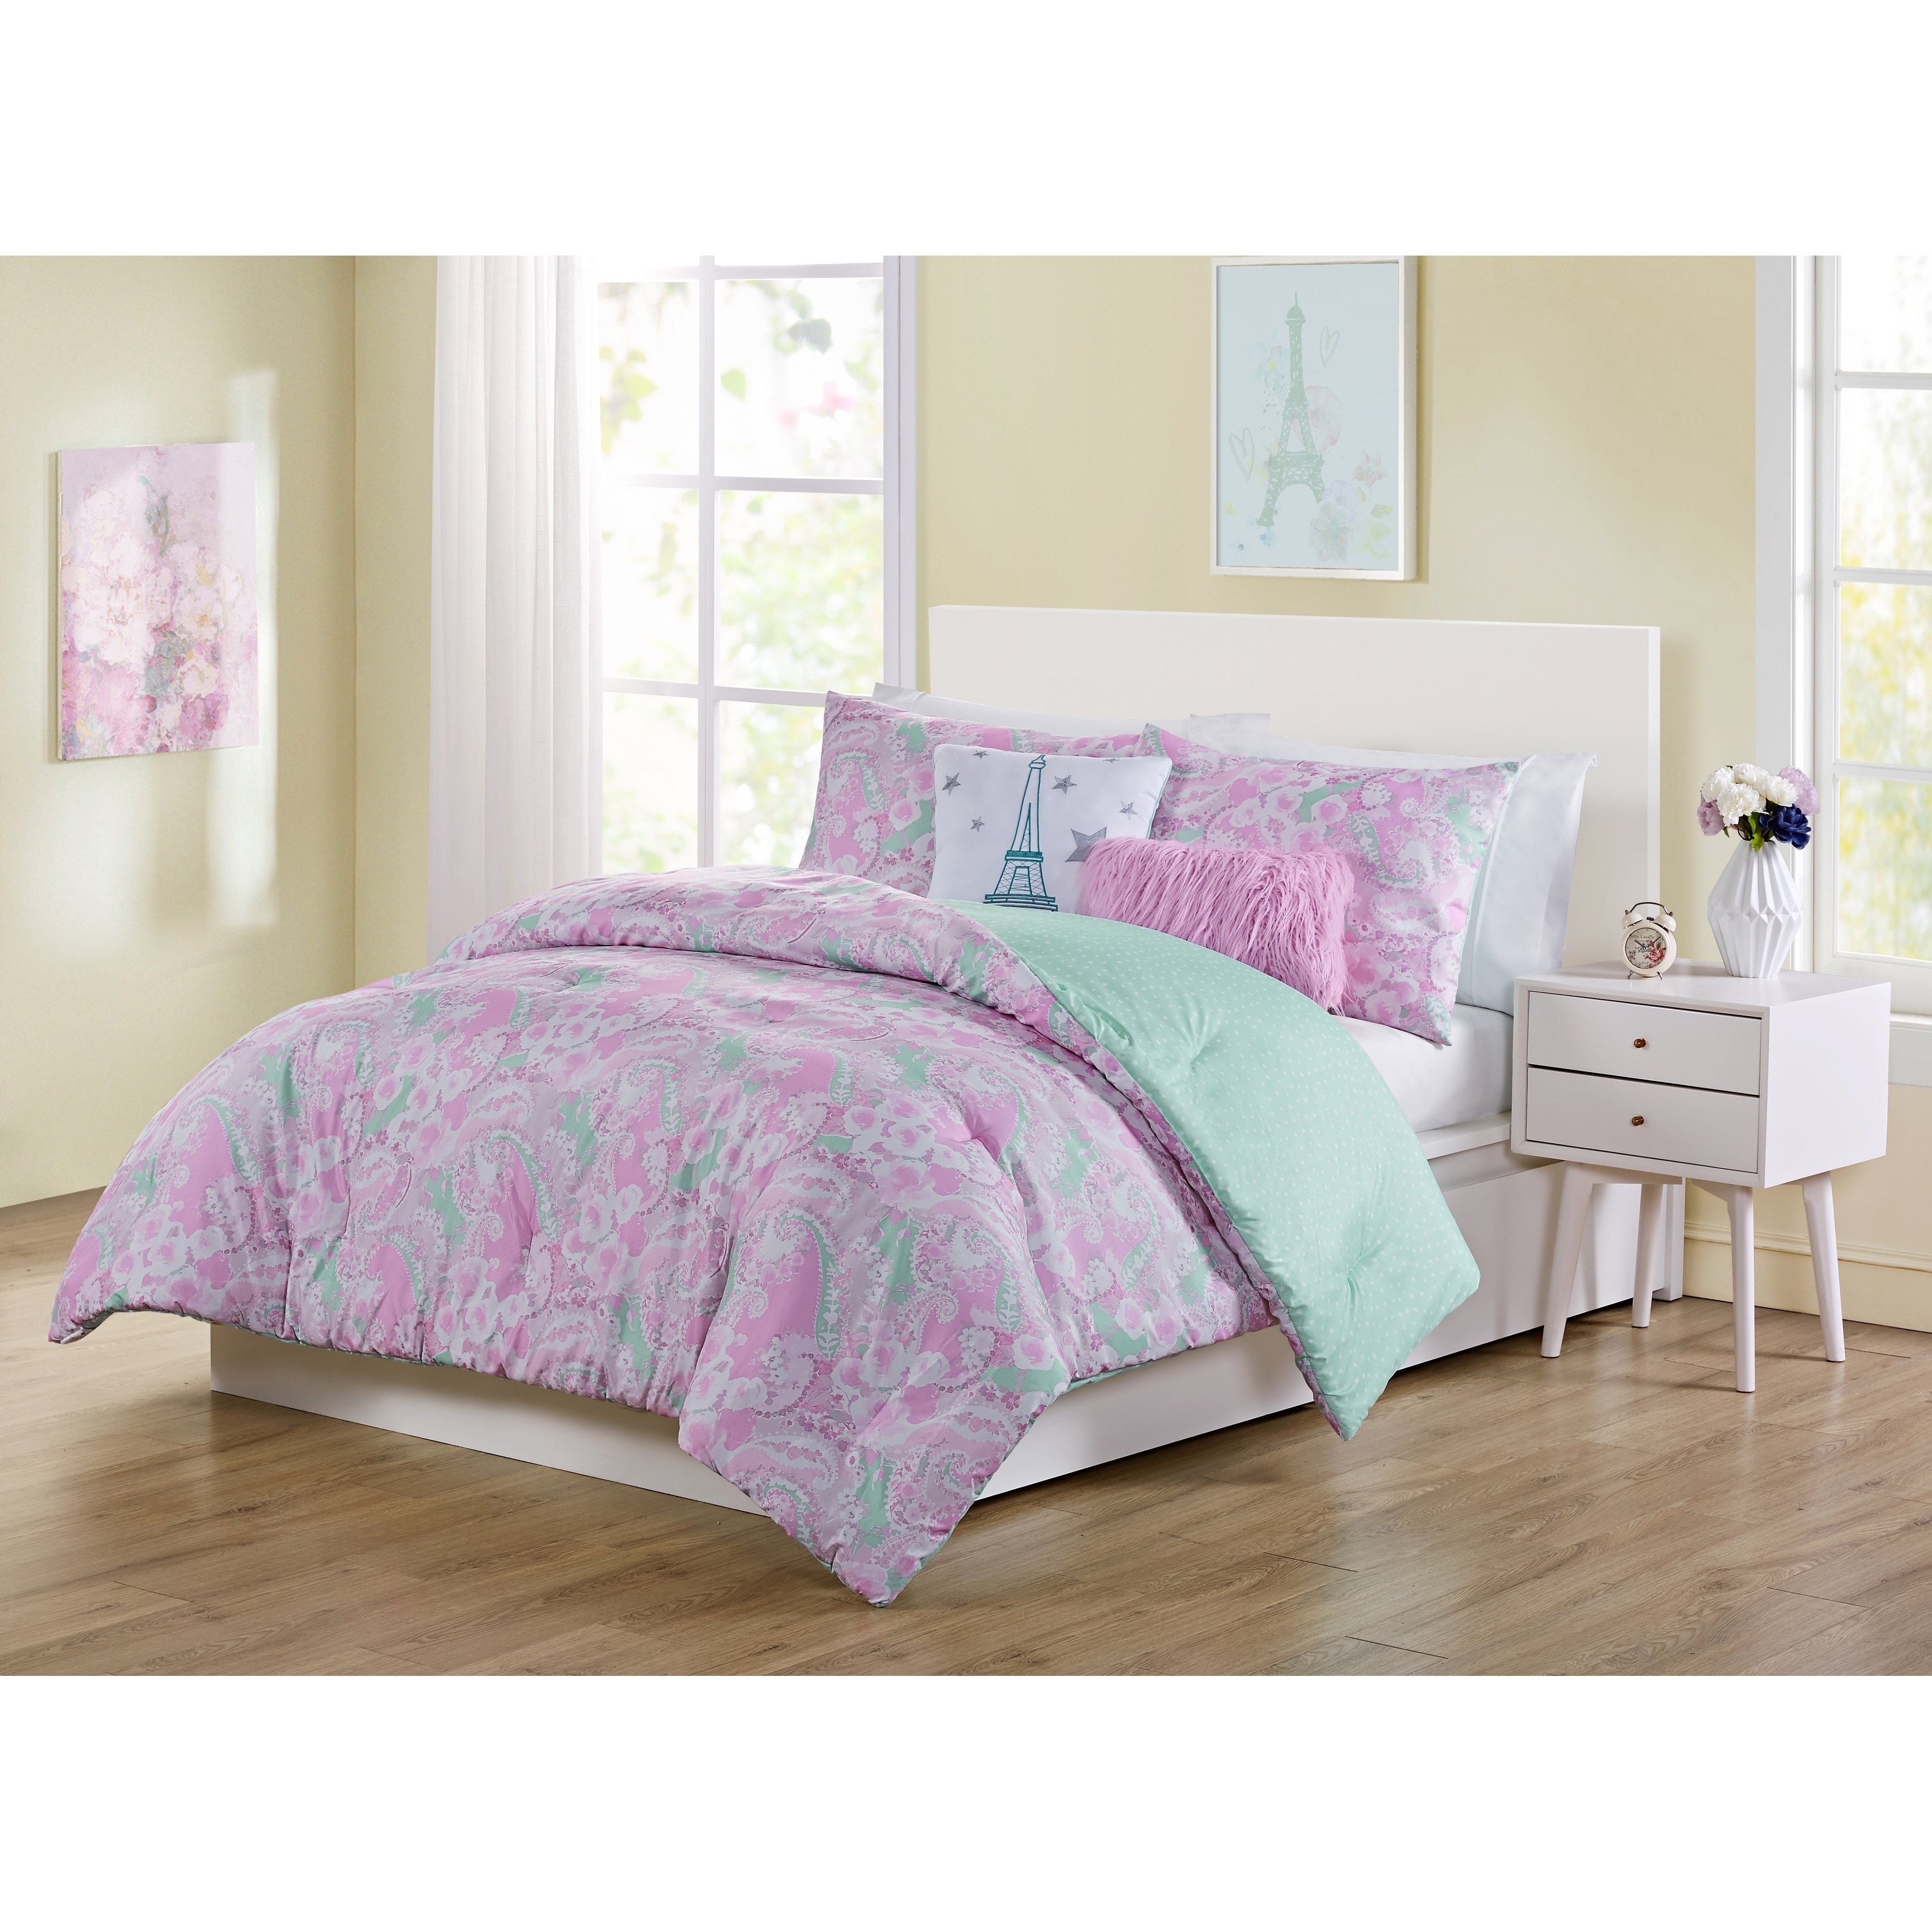 Shop Vcny Home Marbella Reversible Pink Paisley Comforter Set